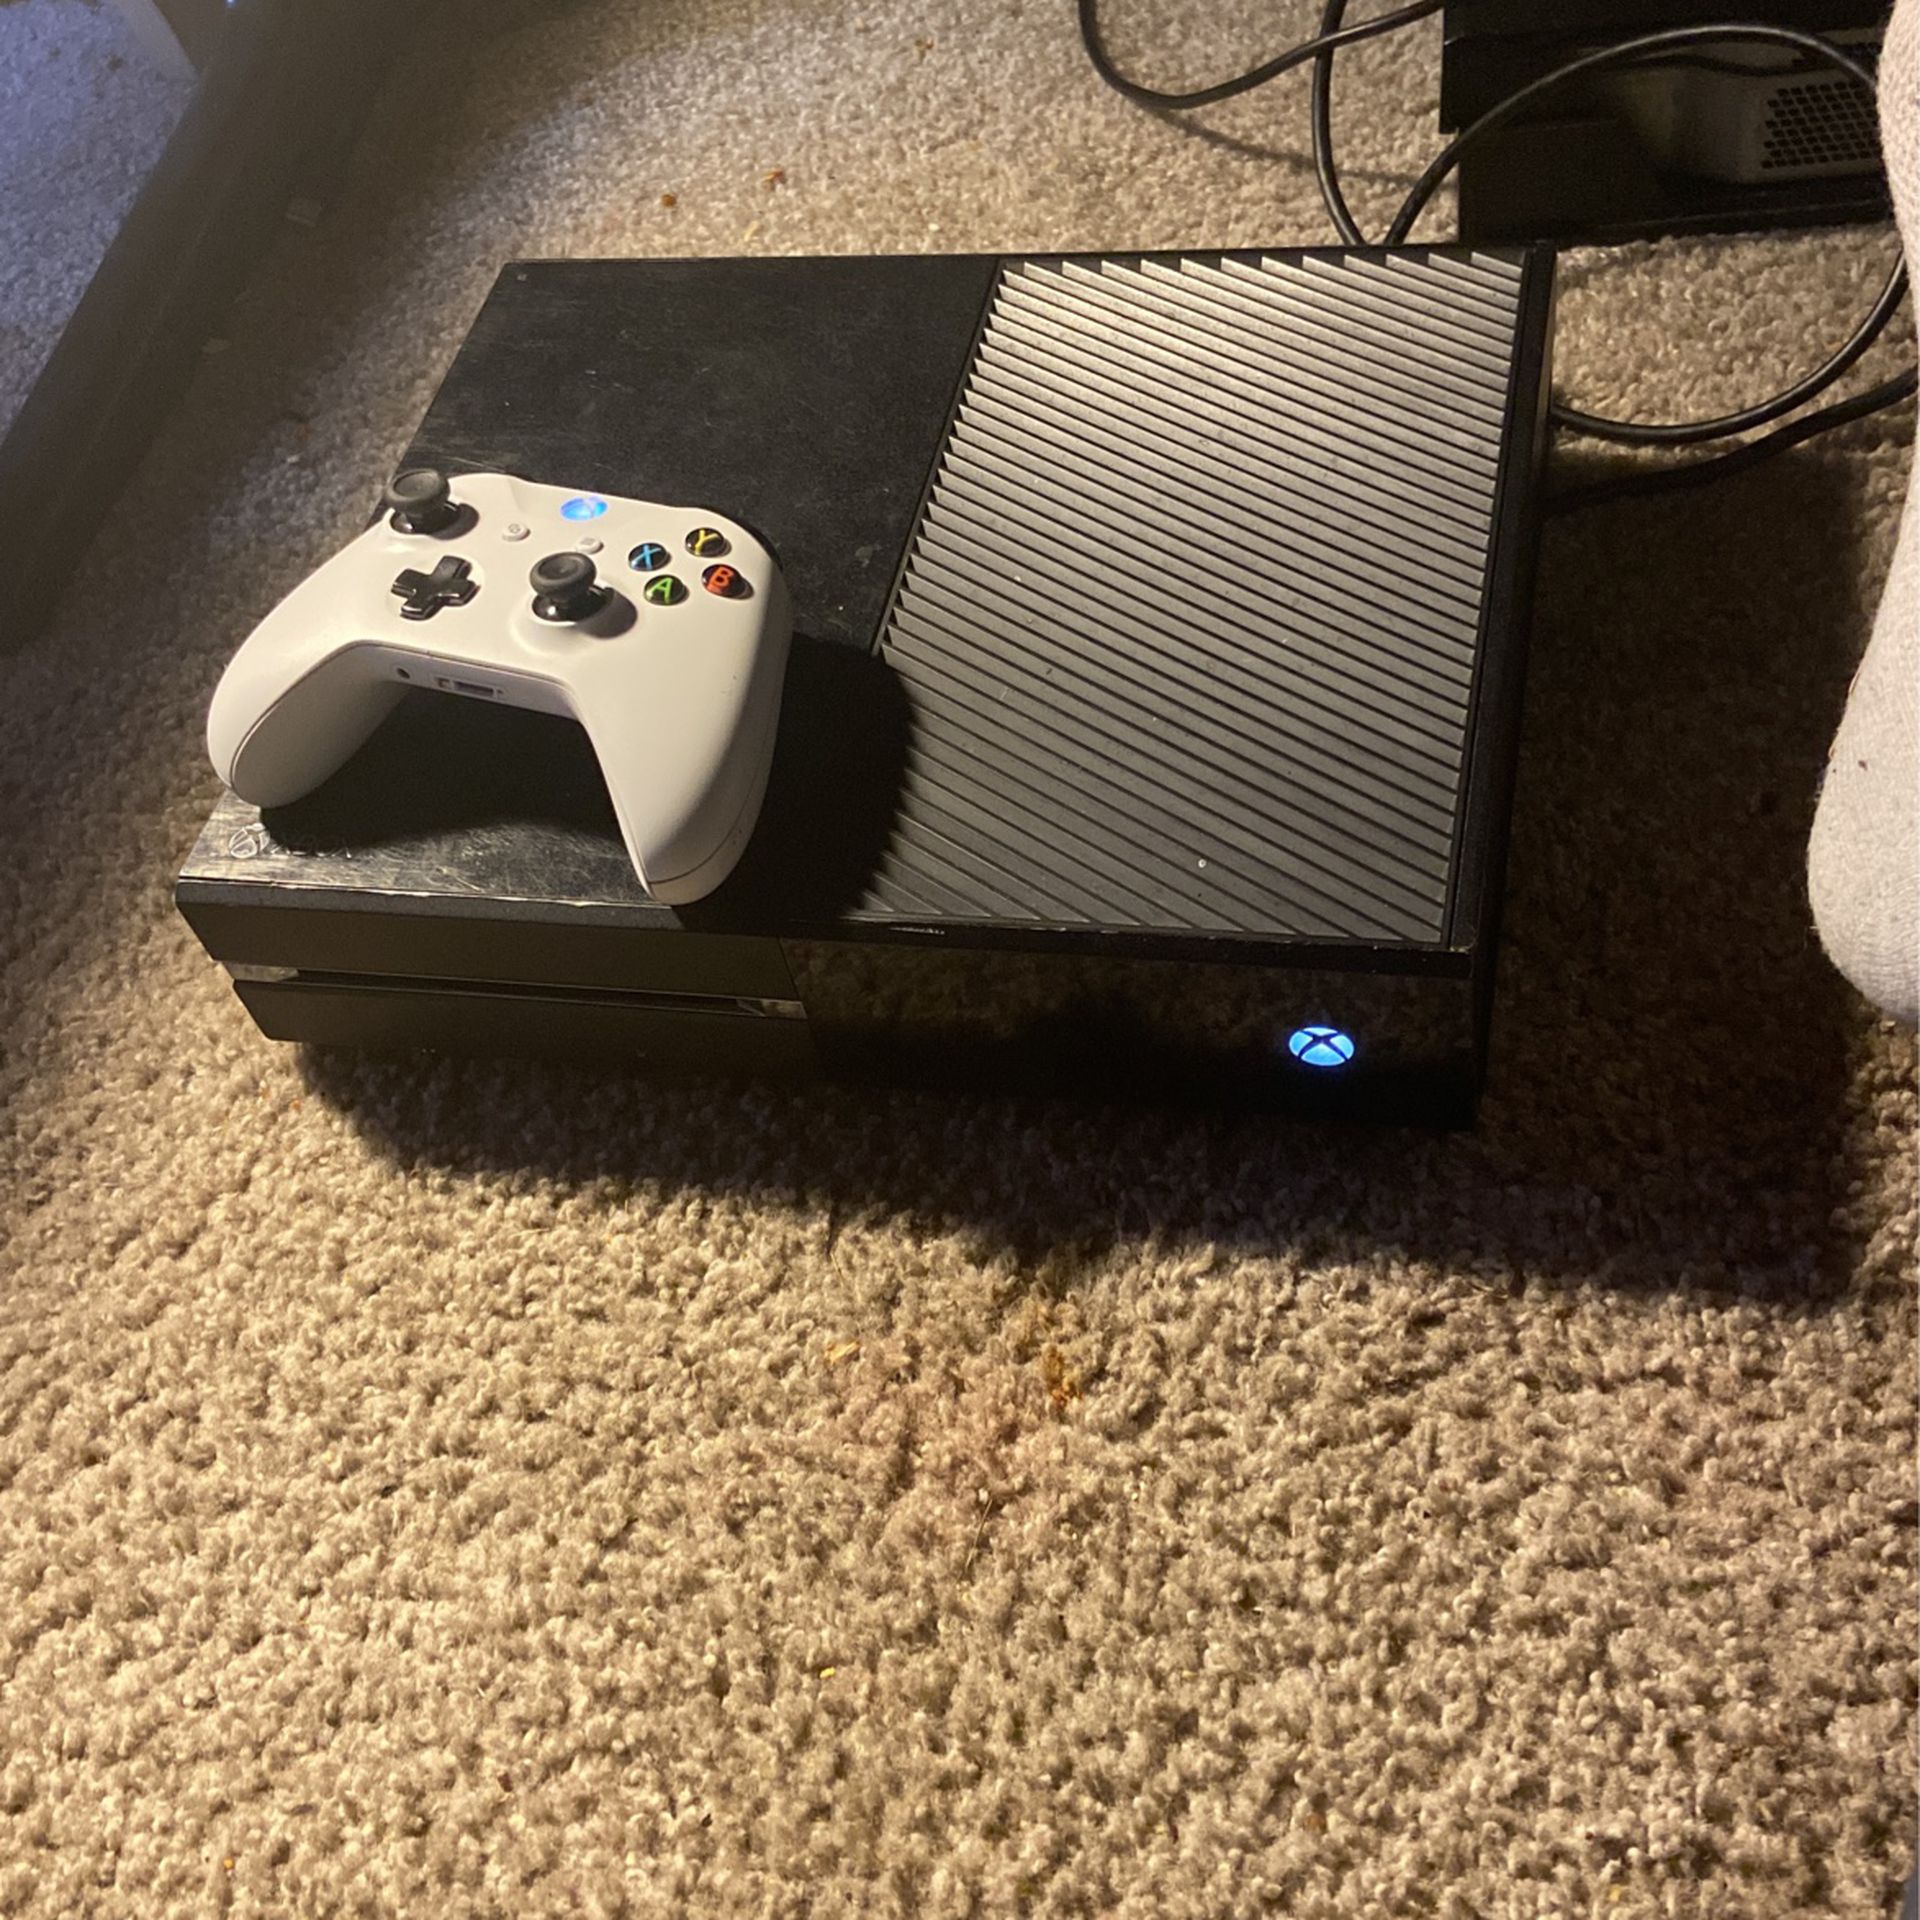 Regular Xbox One